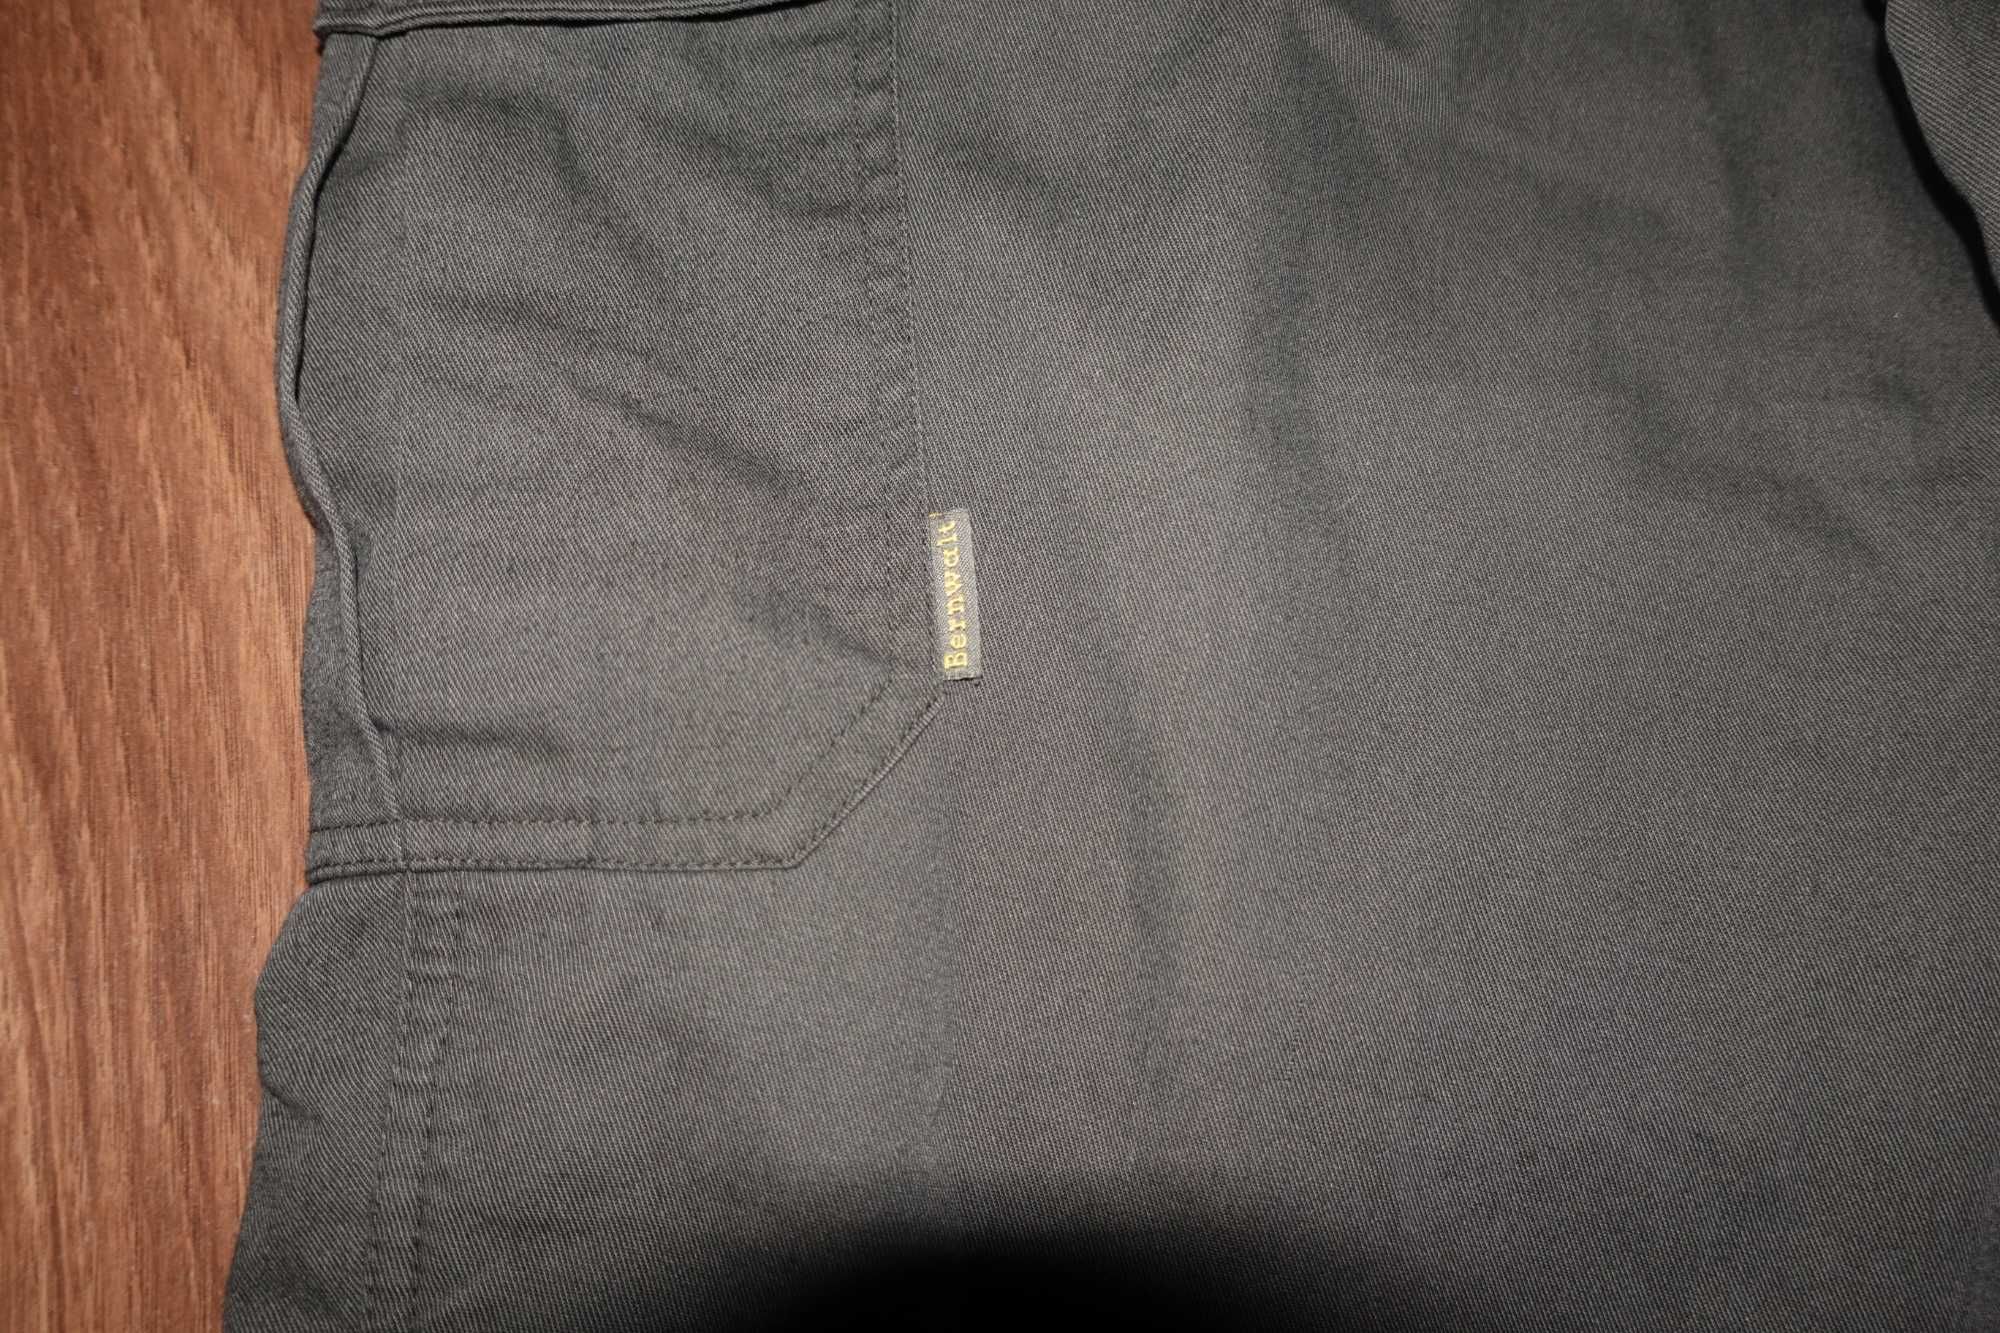 Pantaloni Vanatoare Bernwalt , Marimea 52/L-XL, Kaki,Stare foarte buna